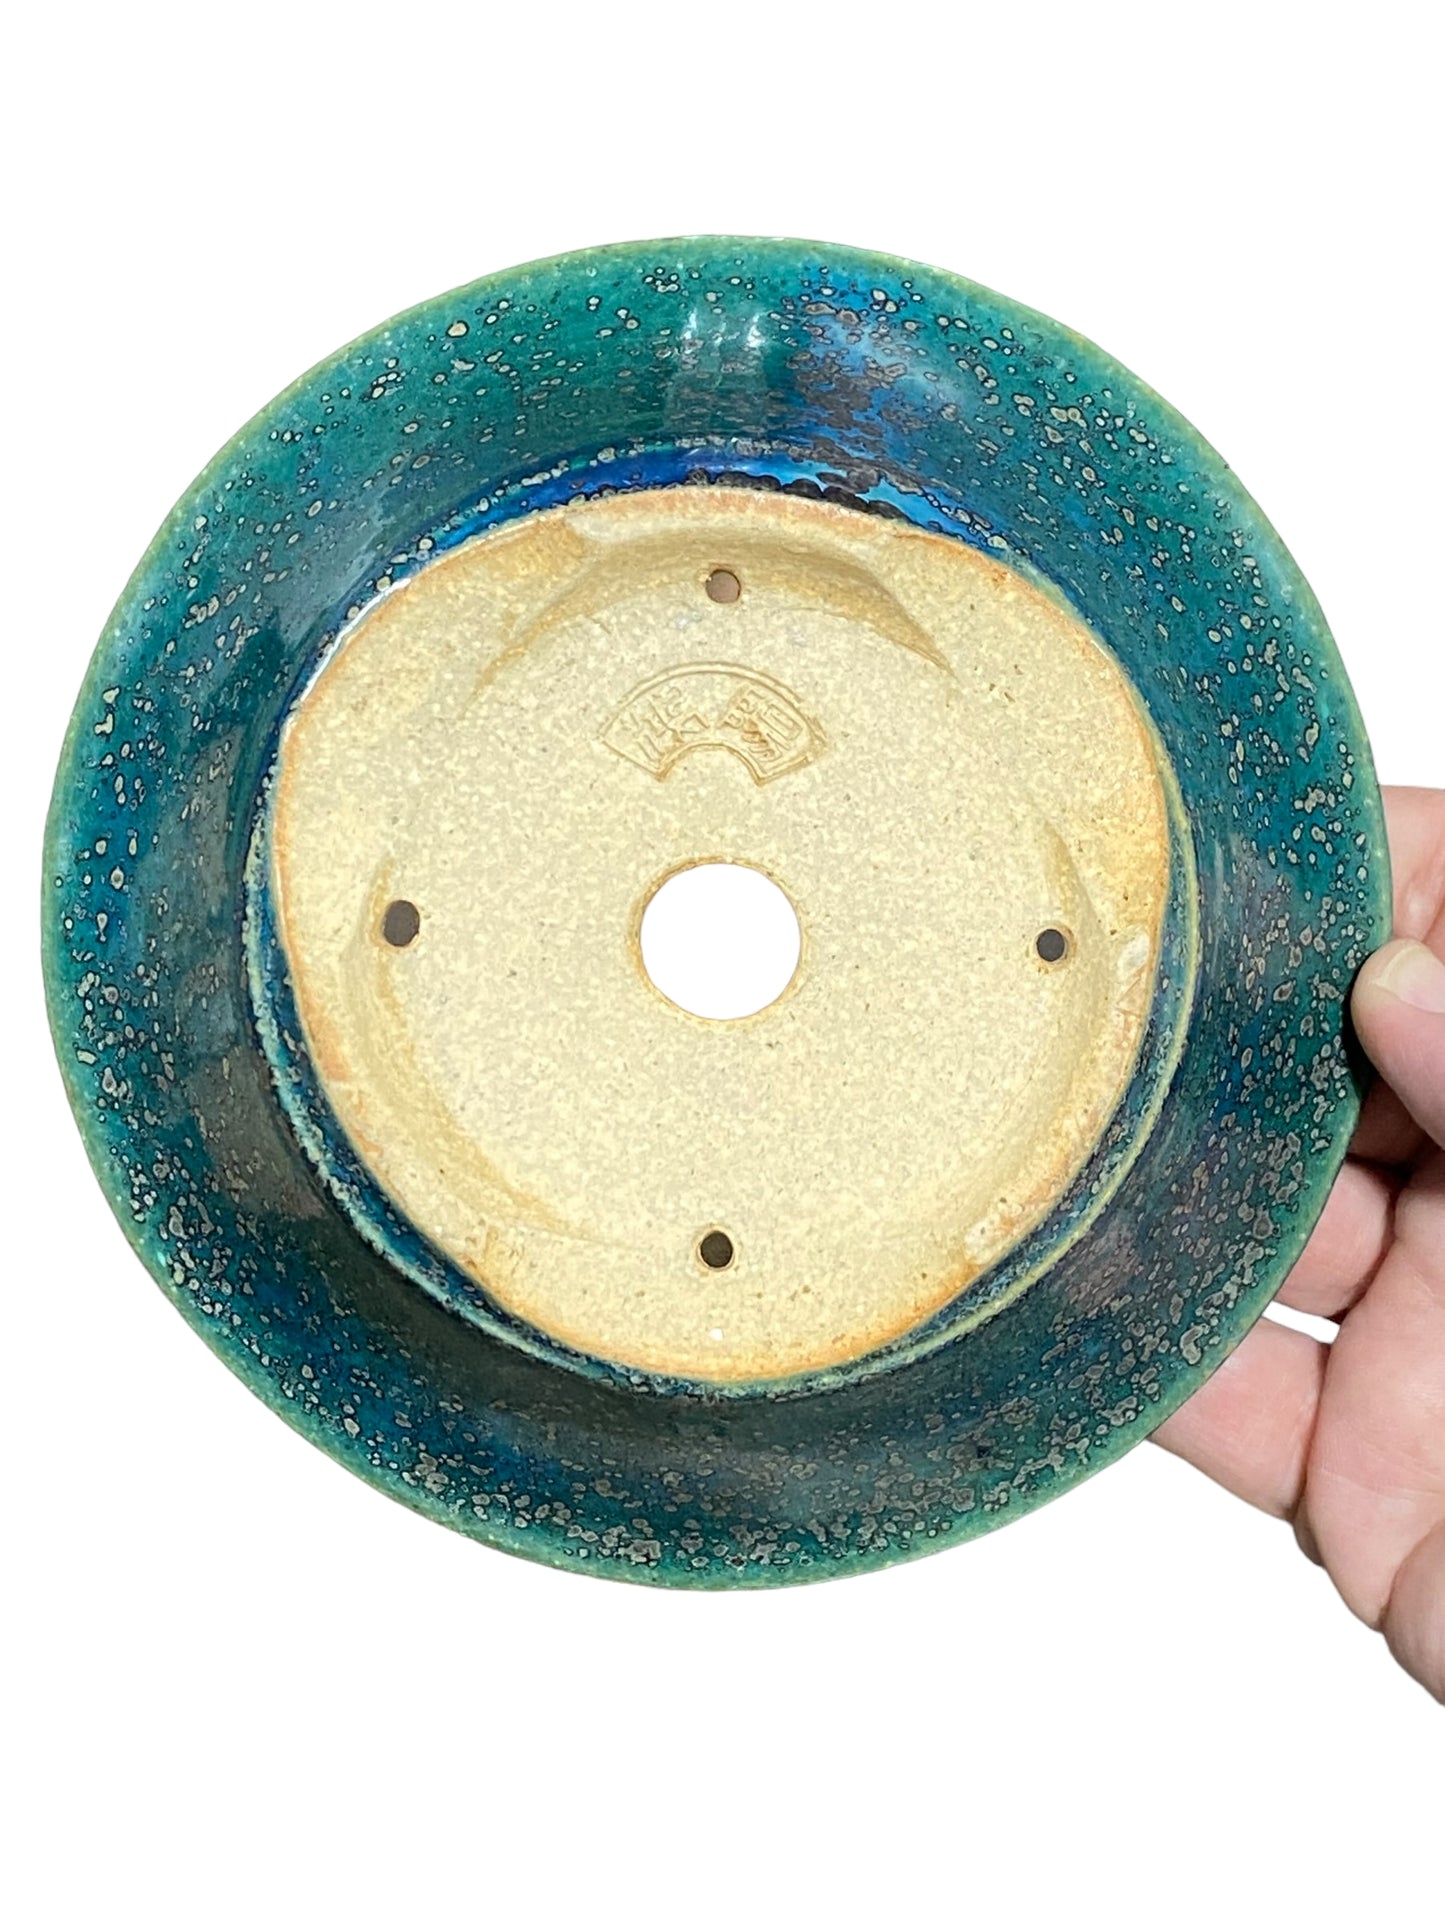 Koyo - Stunning Large Oribe Glazed Banded Bowl Bonsai Pot